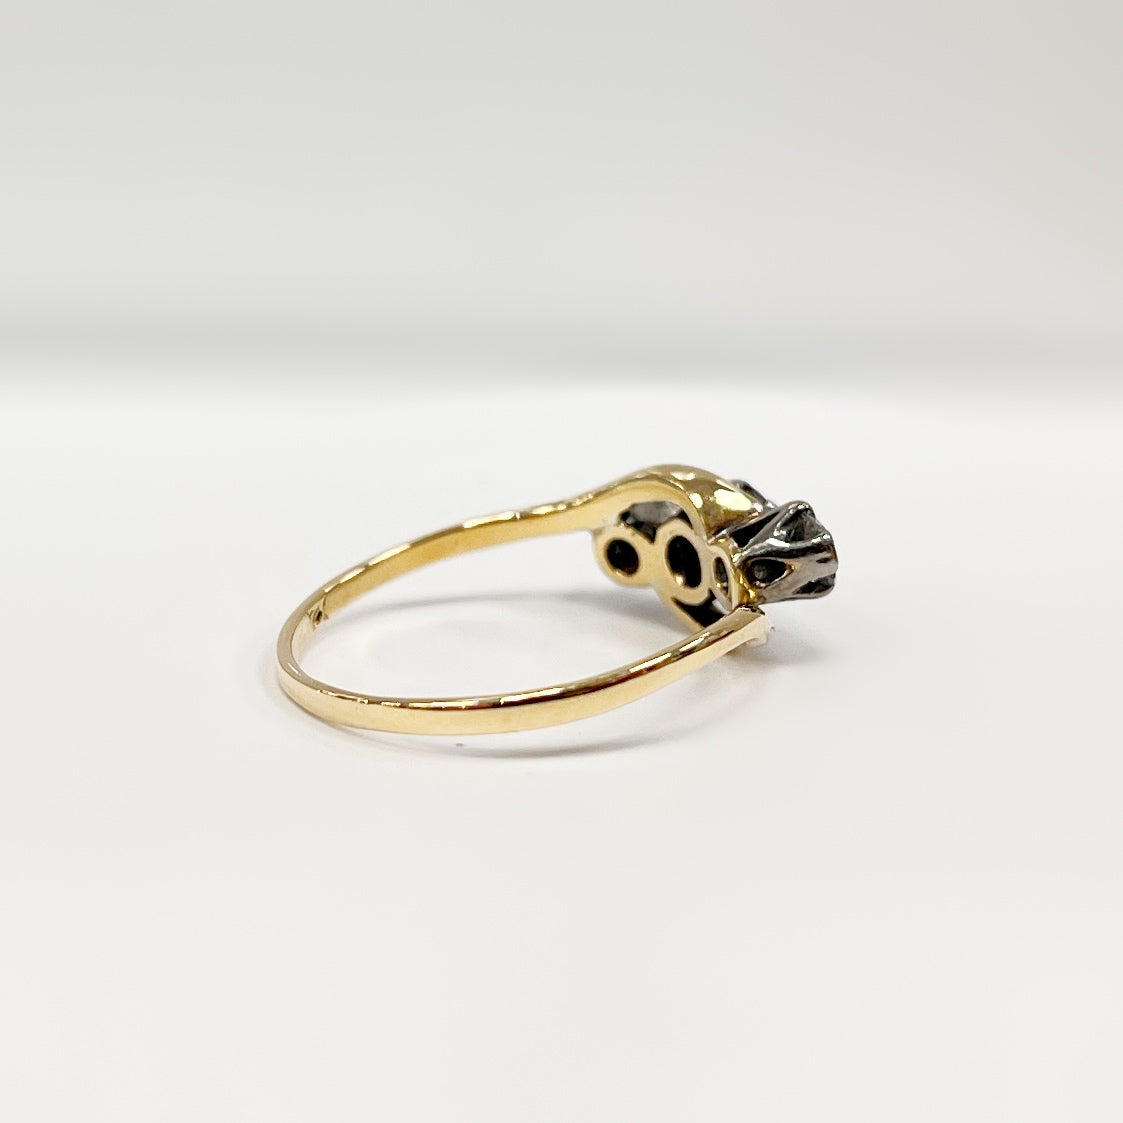 Vintage 18ct Yellow Gold Diamond Trilogy Twist Ring - Size L